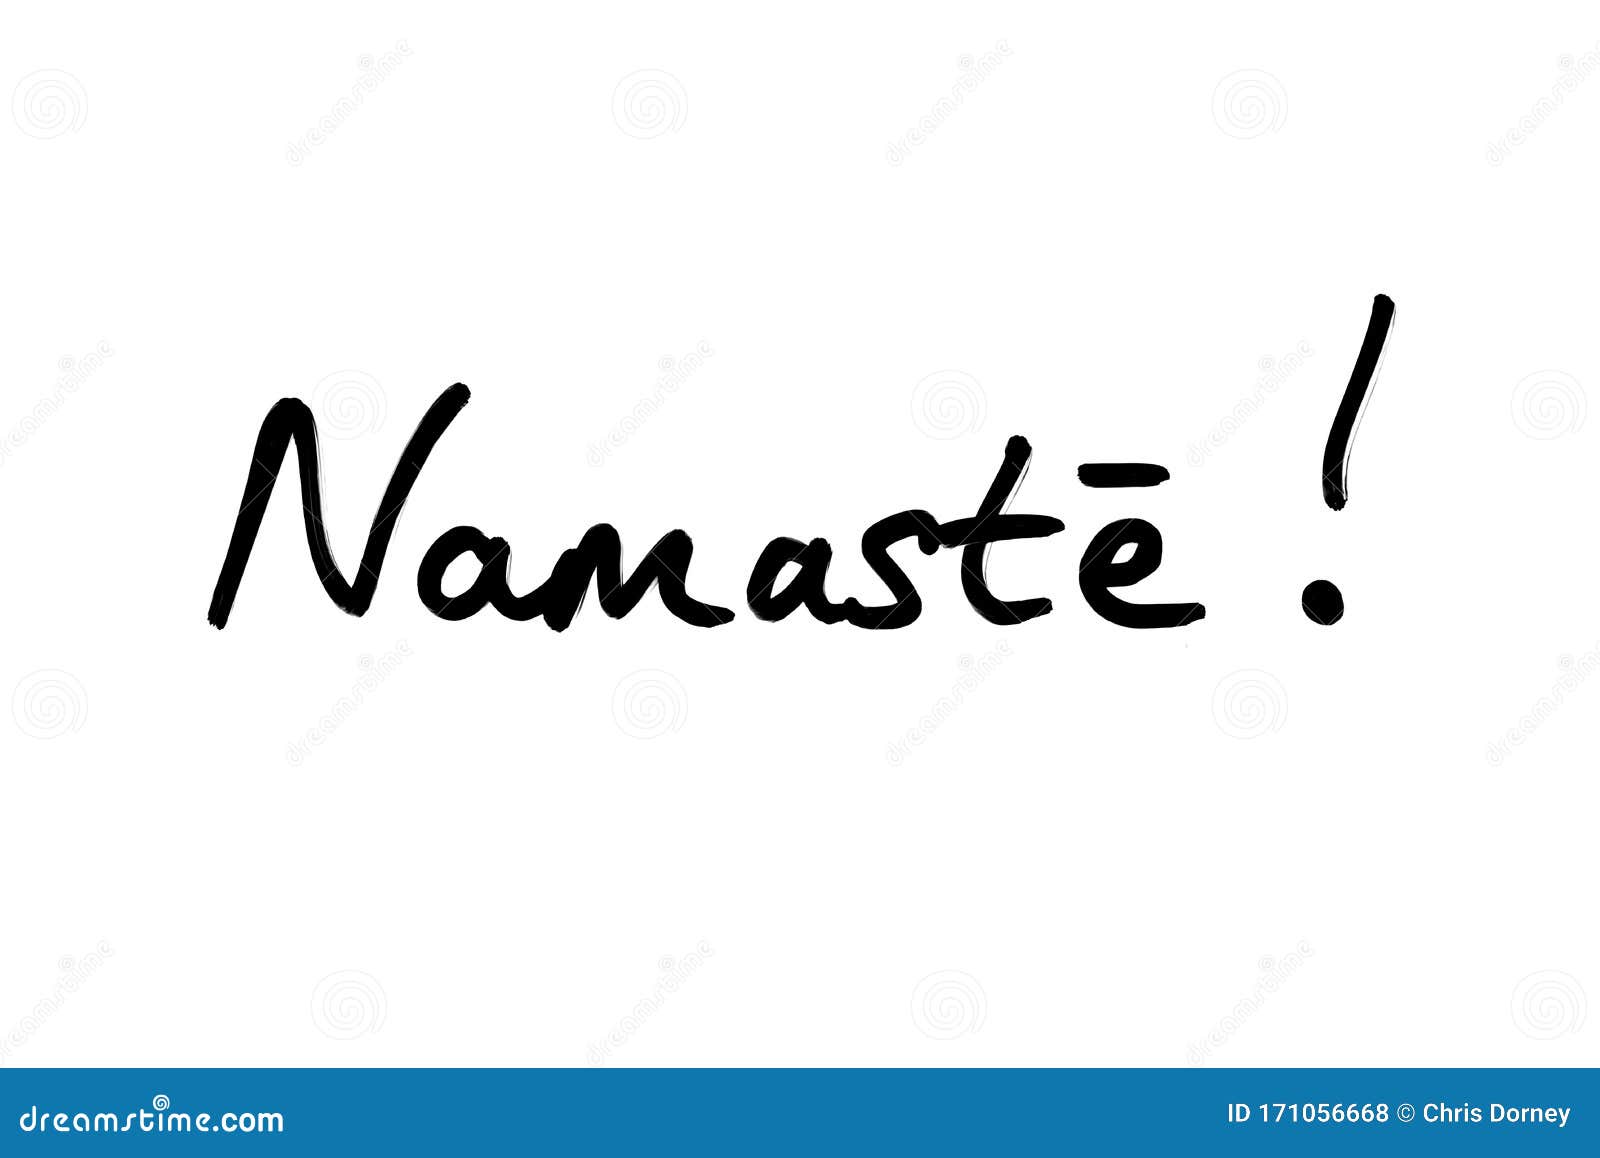 Namaste stock photo. Image of emblem, handwritten, board - 171056668